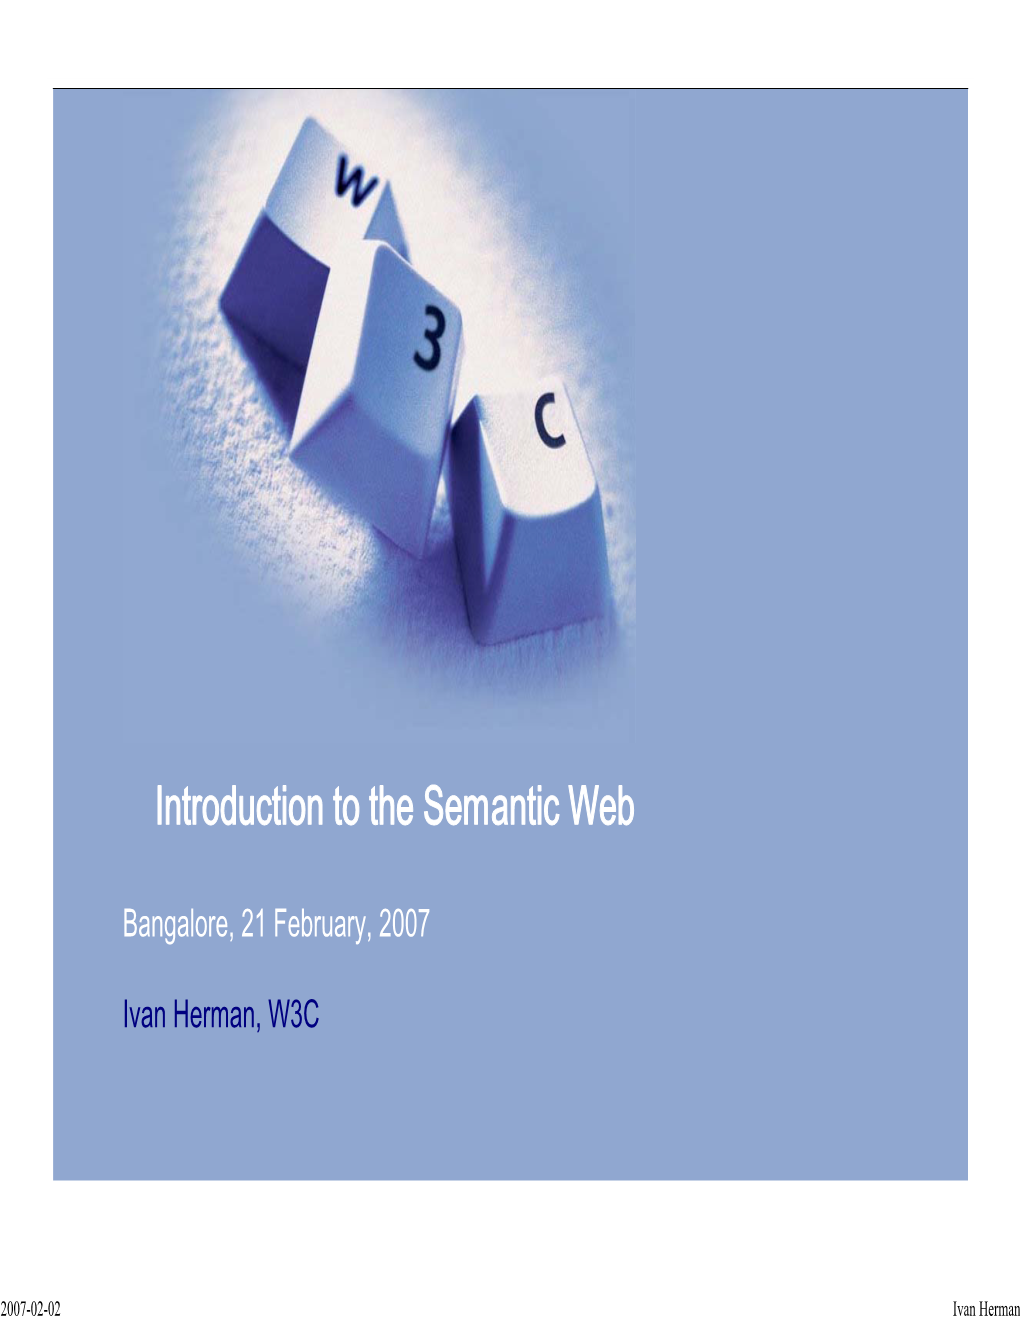 Tutorial on Semantic Web Technologies